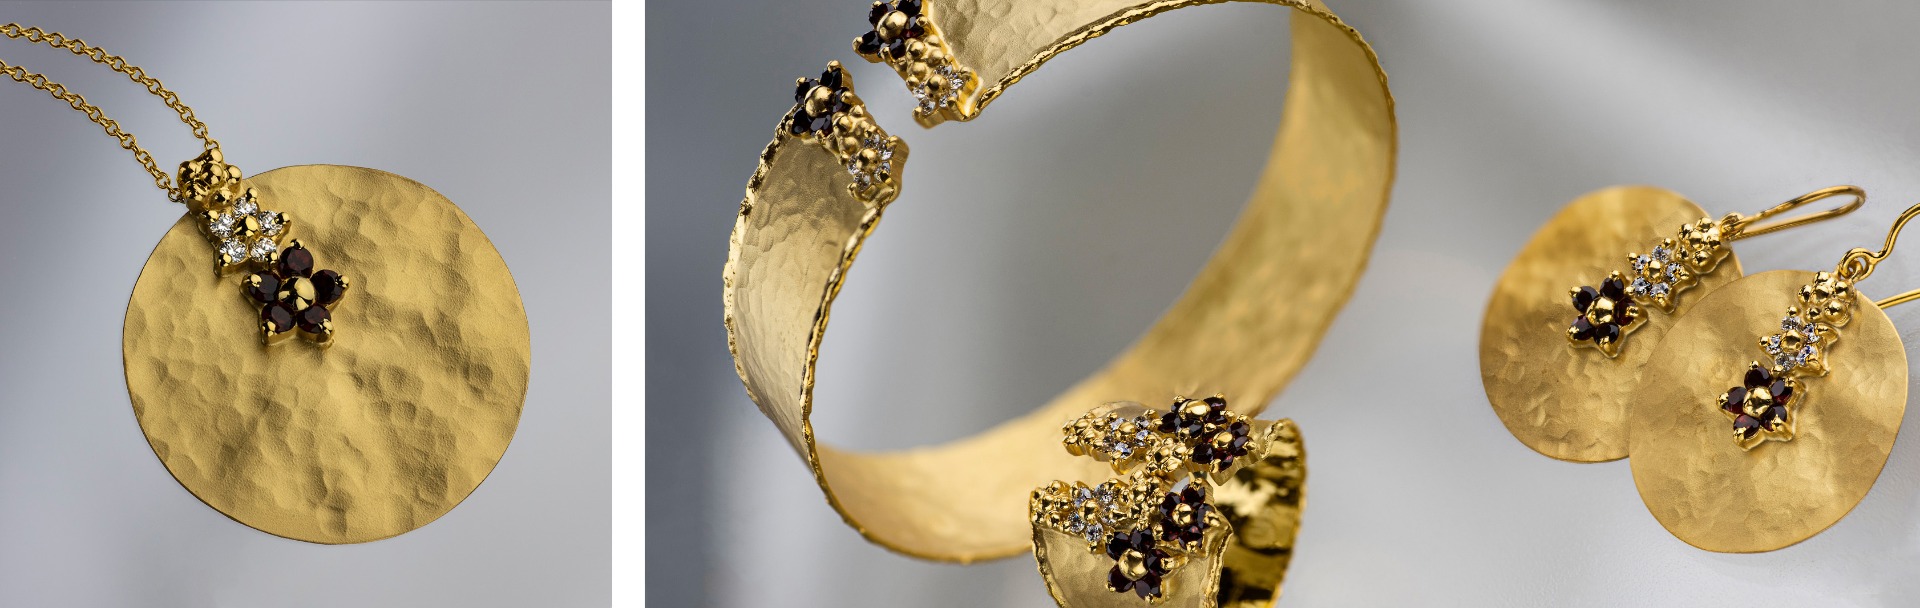 14K Gold Jewelry with Garnet and Diamonds